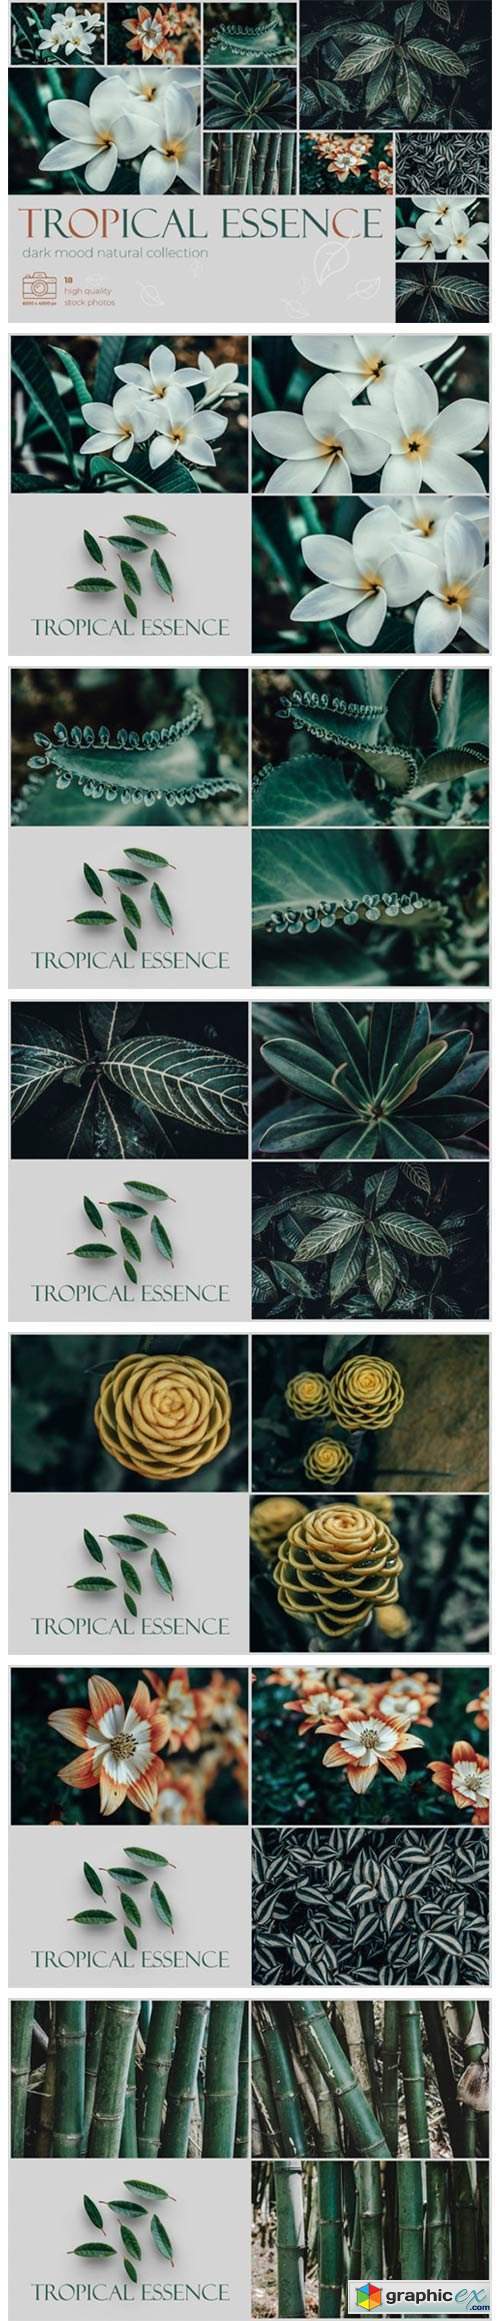 Tropical Essence. Photo Bundle